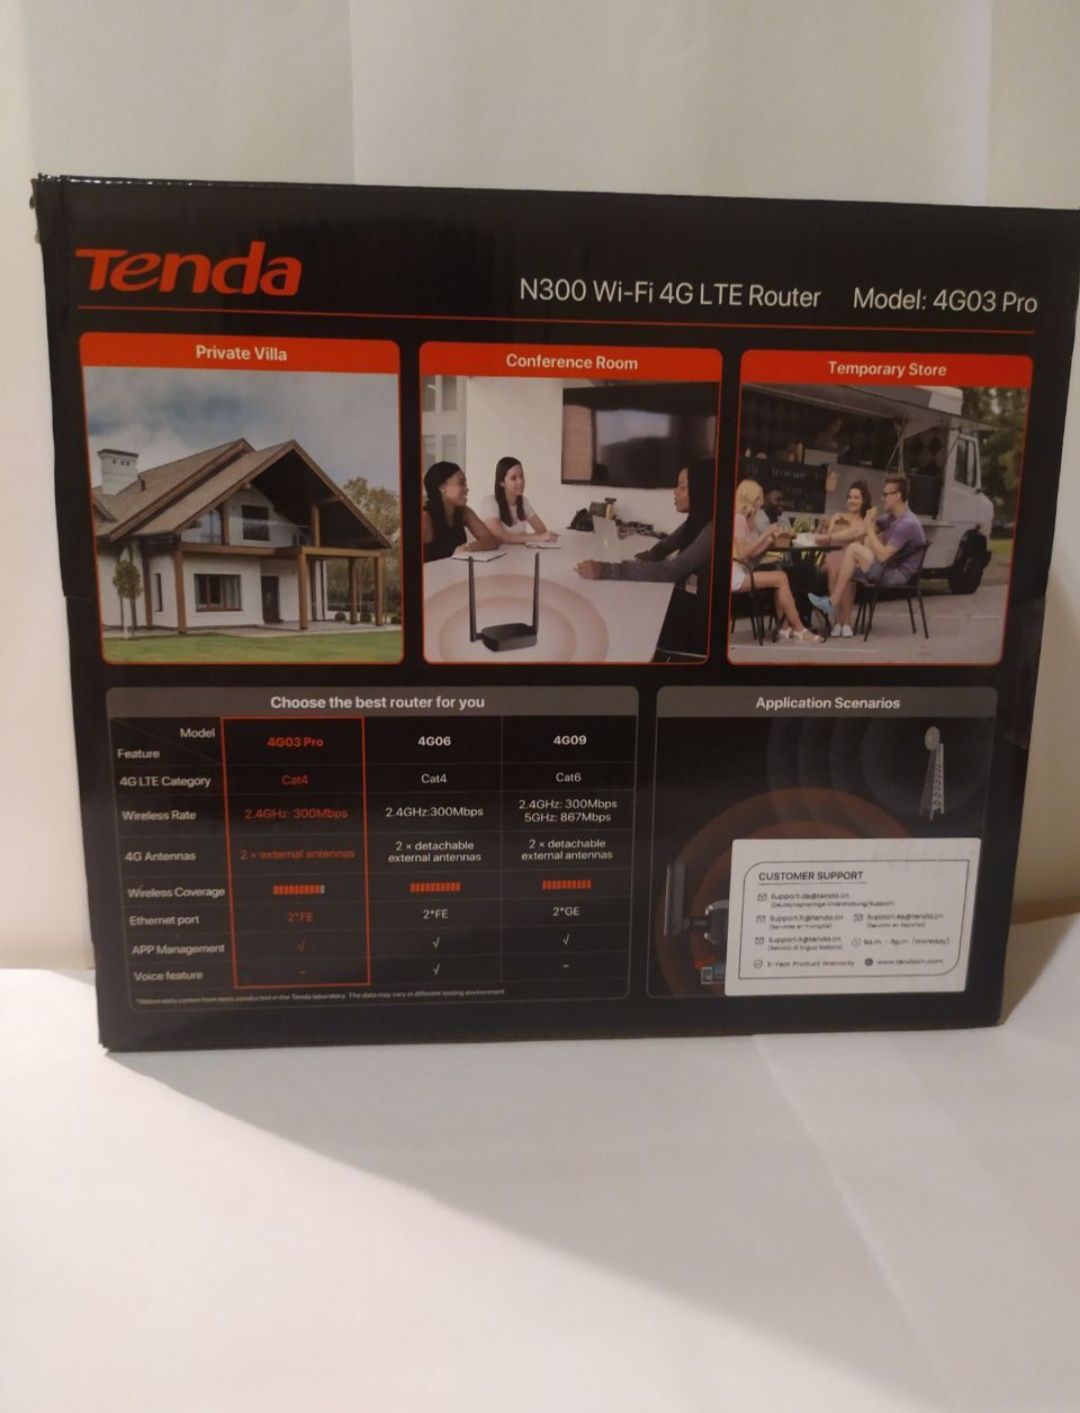 Маршрутизатор Tenda N300 Wi-Fi 4G LTE 4G03 PRO
「4G03 Pro」